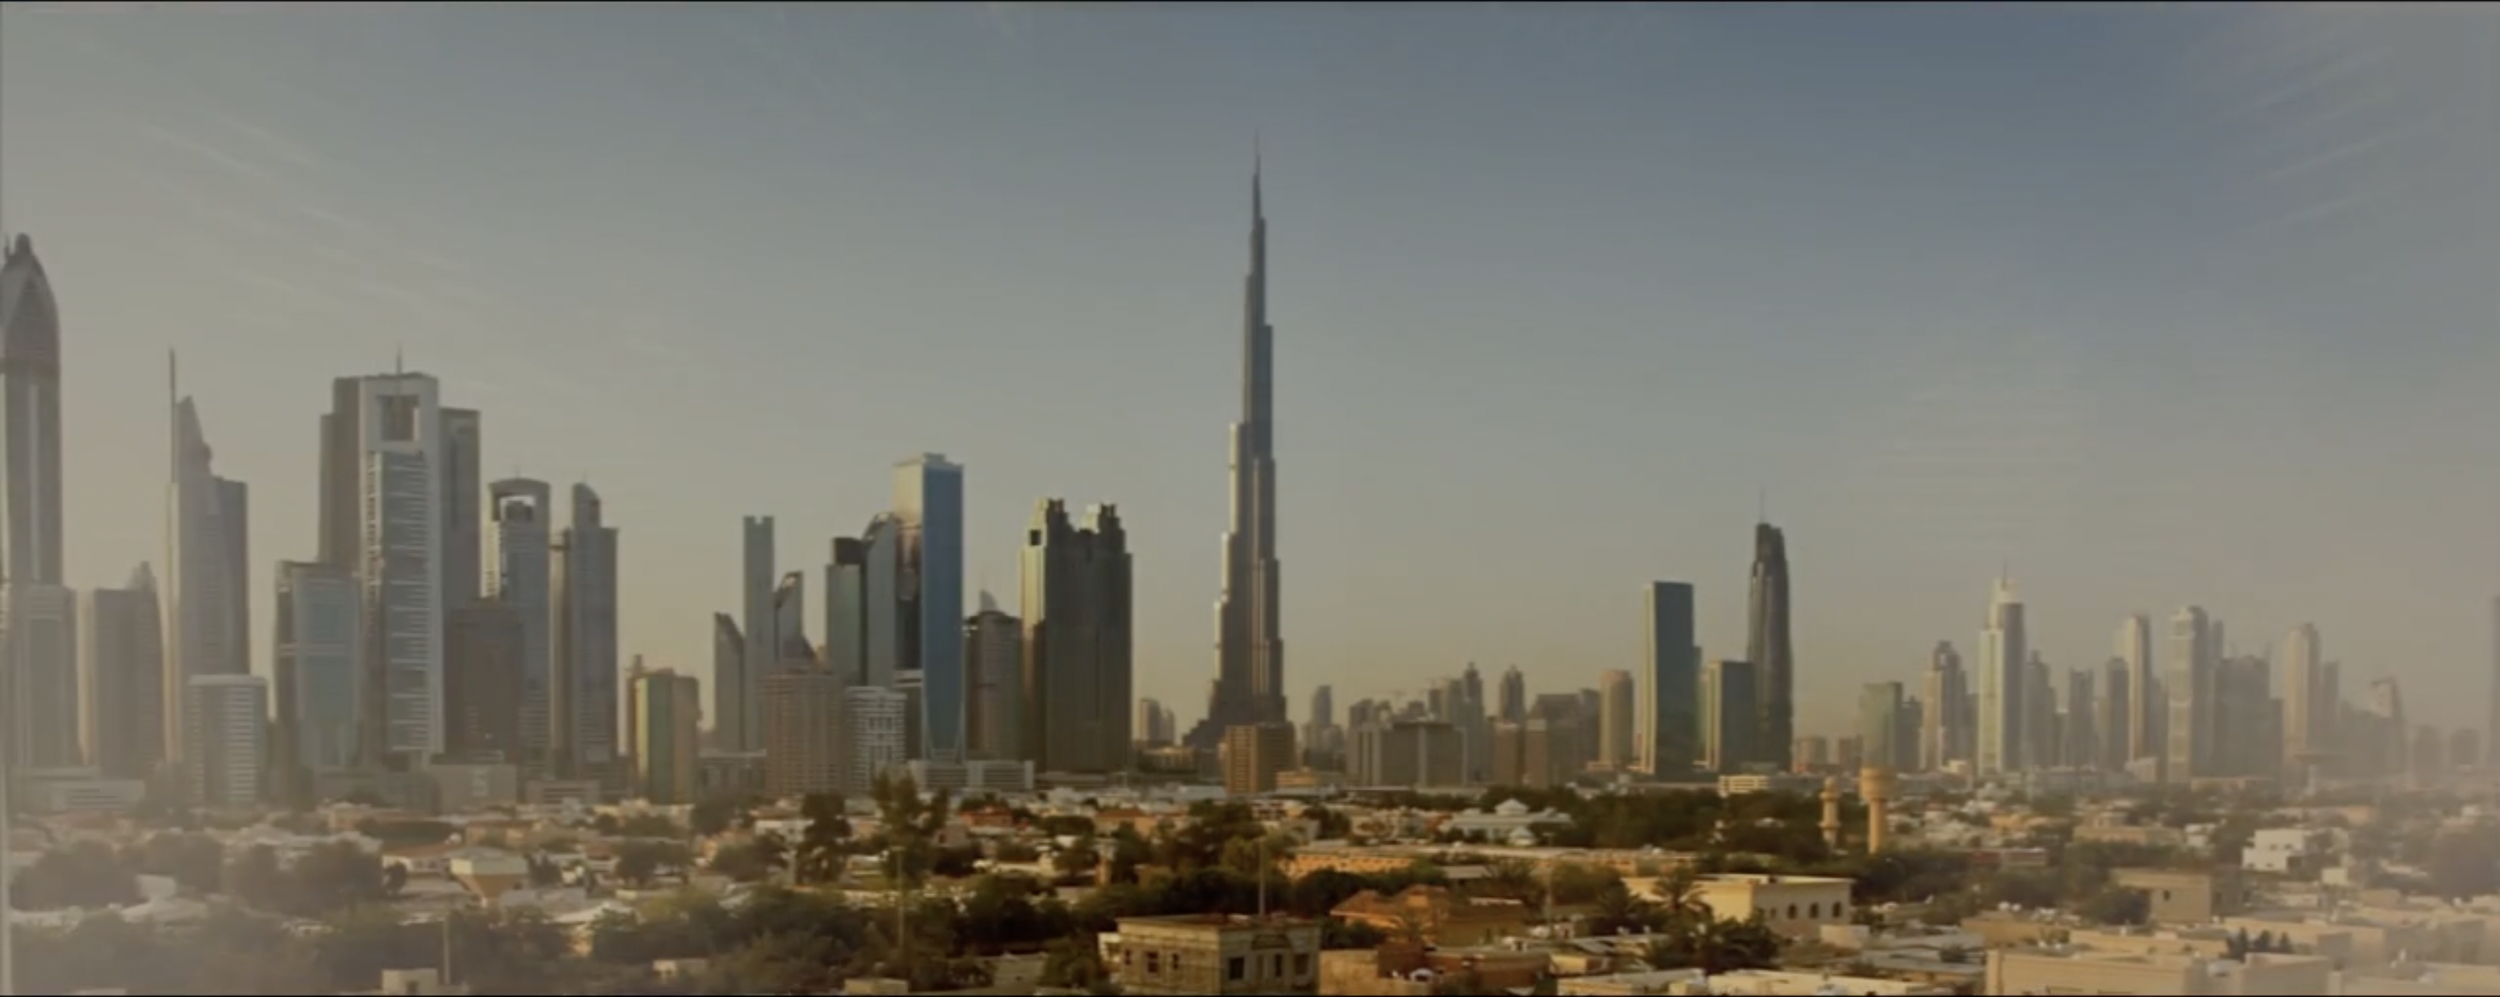 Burj Khalifa, At the Top Experience